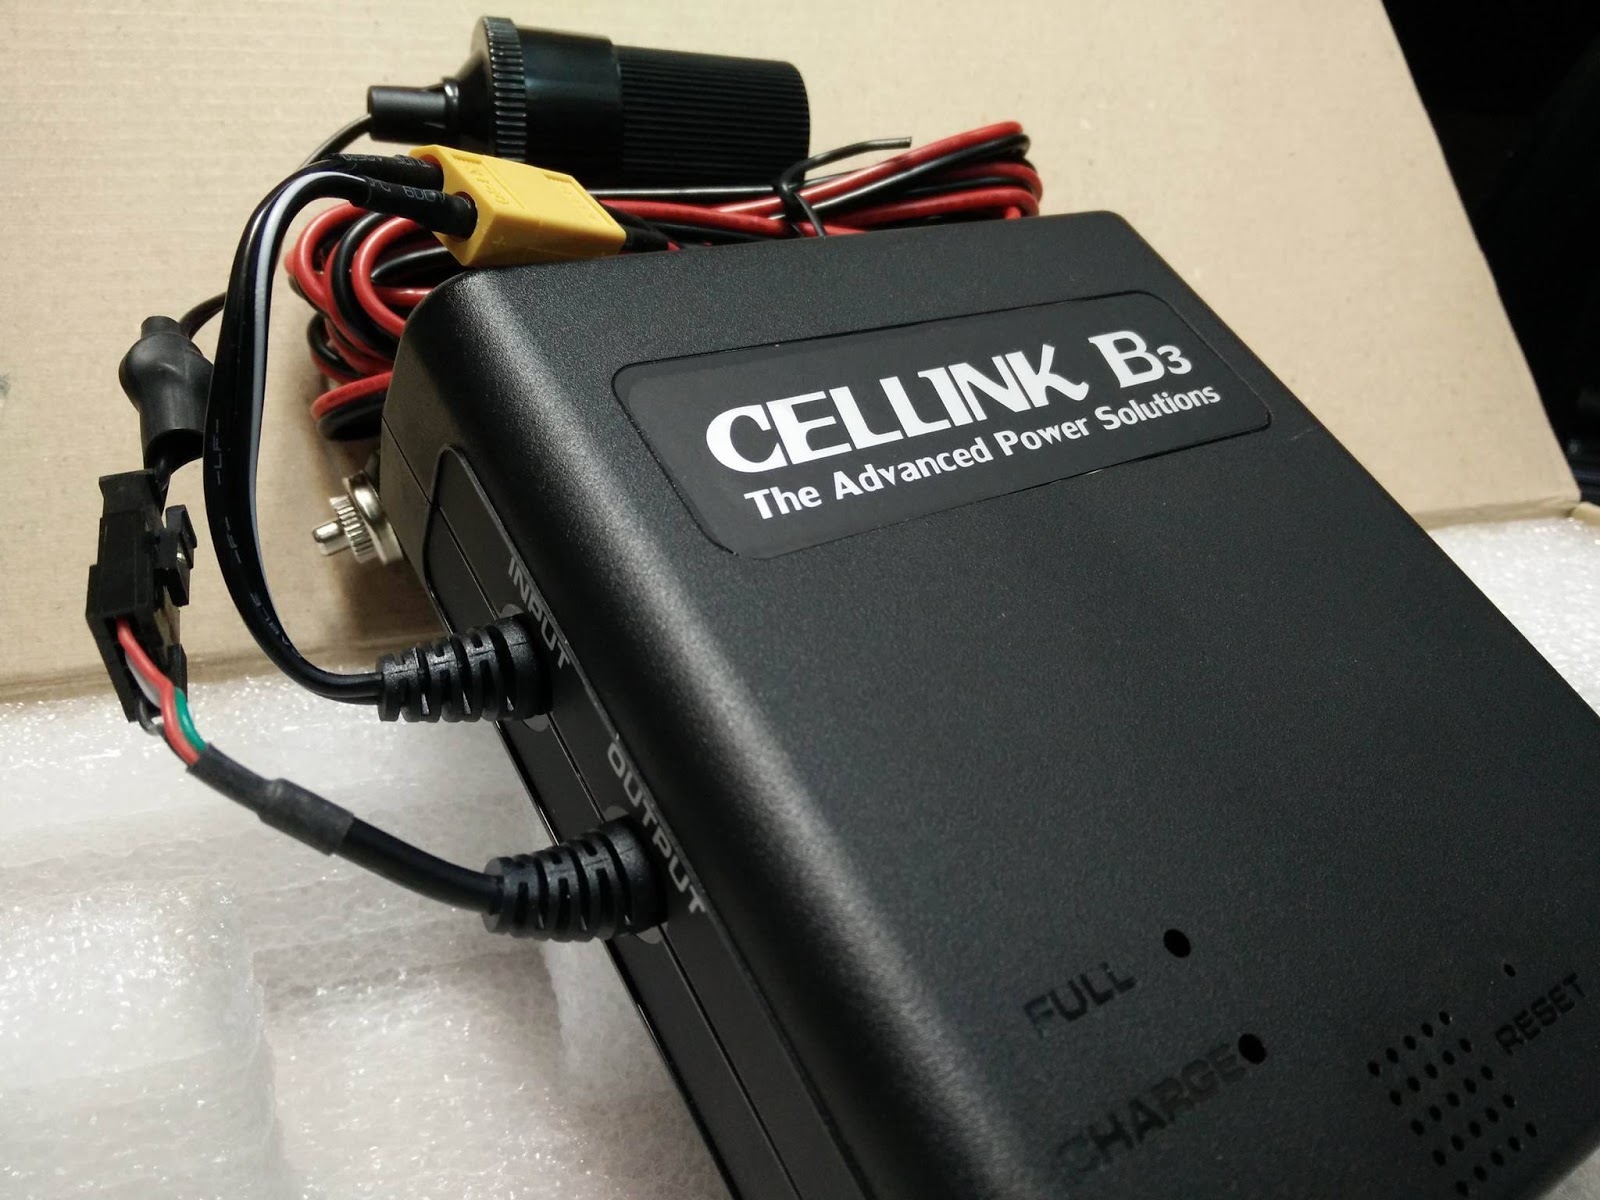 http://4.bp.blogspot.com/-w5OsLZVYvL0/VodRQue6uZI/AAAAAAAAMLE/F_EwCQbE3uw/s1600/Cellink-B3-Premium-Battery-Pack-for-Dash-Cam-001.jpg